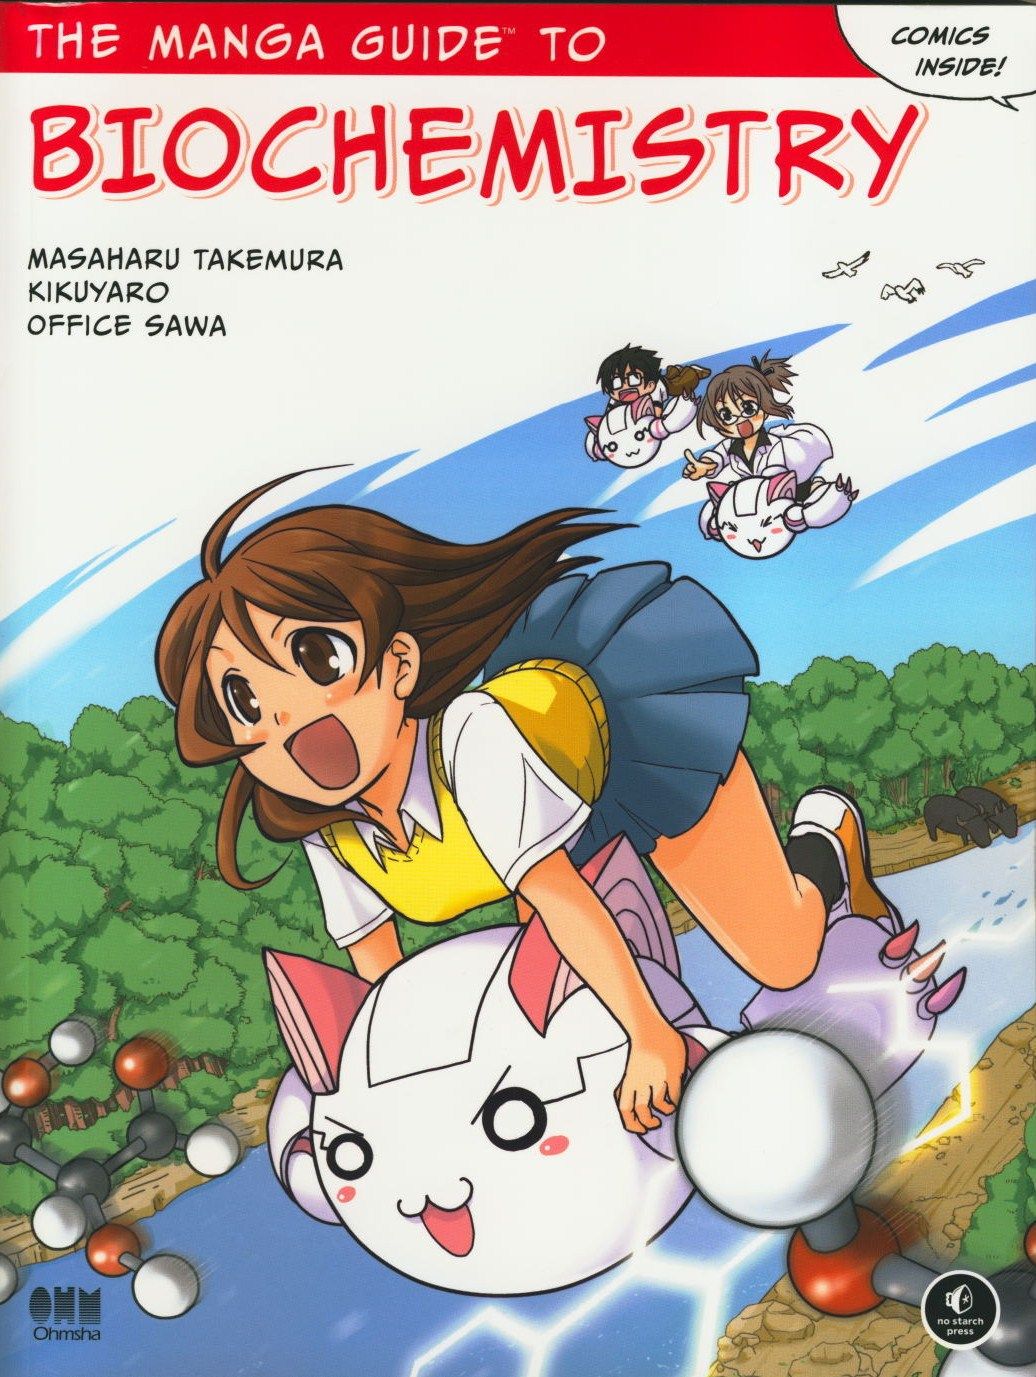 cover of manga guide to biochem